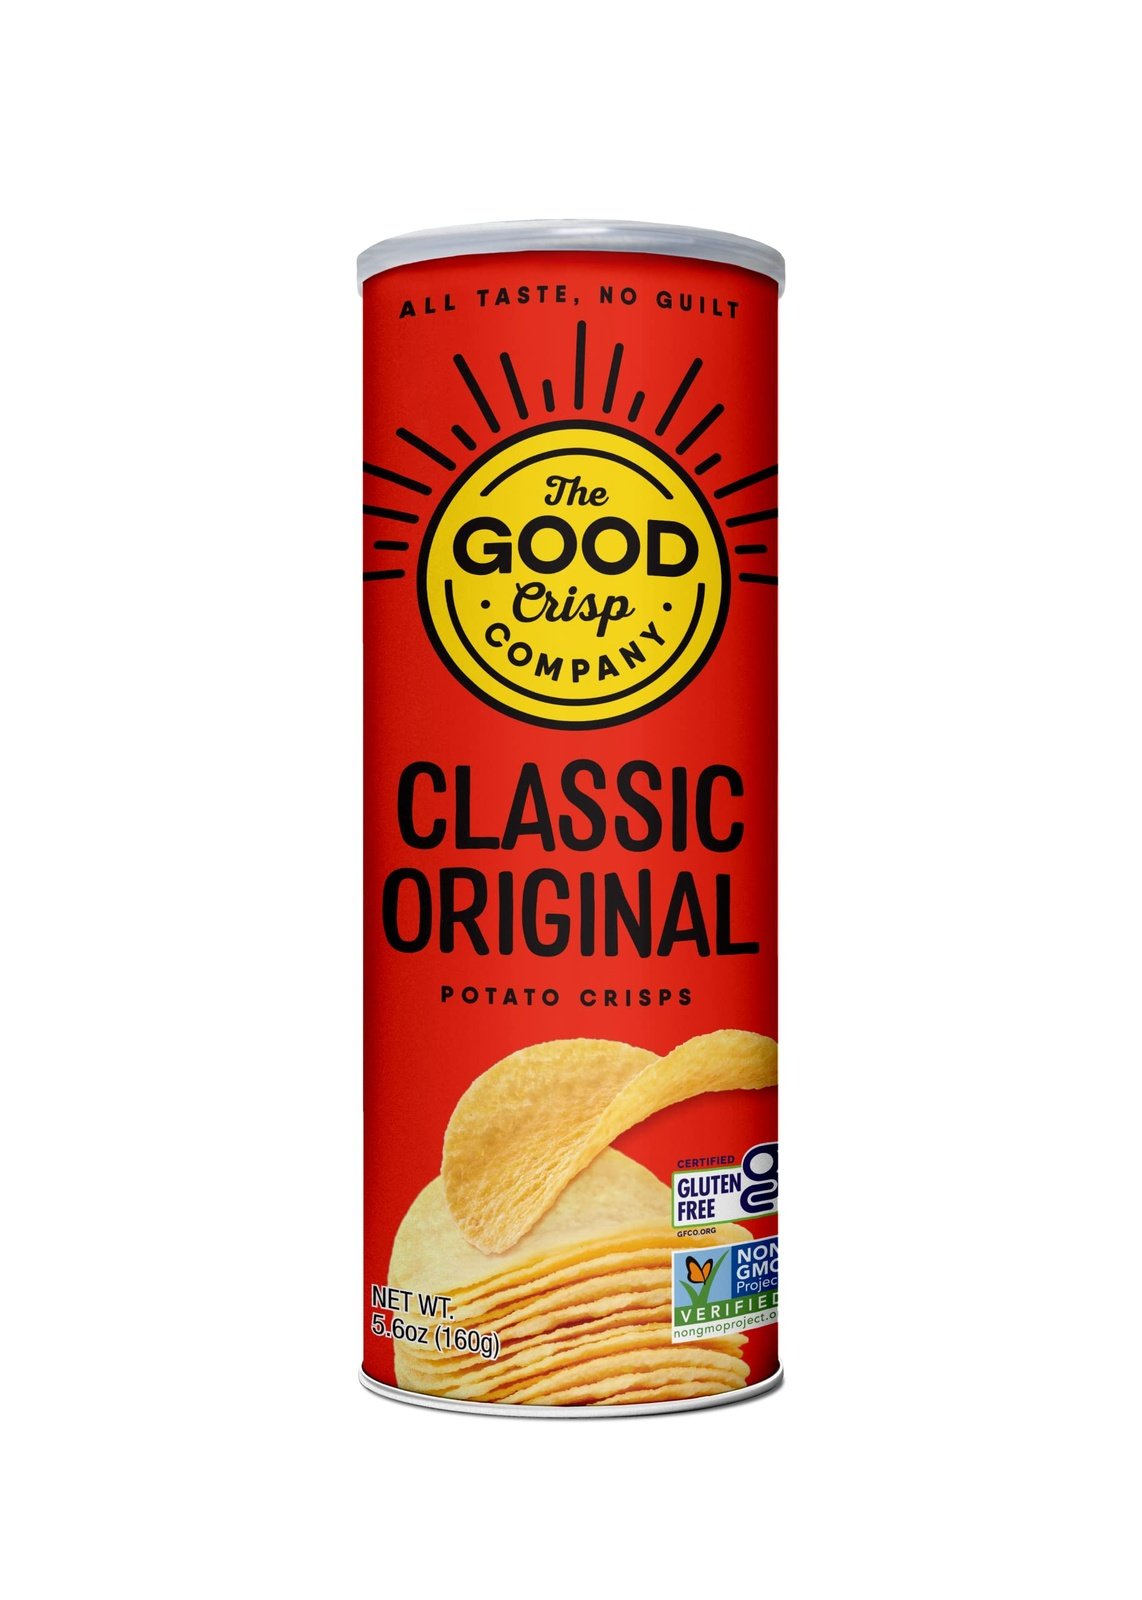 THE GOOD CRISP COMPANY Original Gluten Free Potato Chips